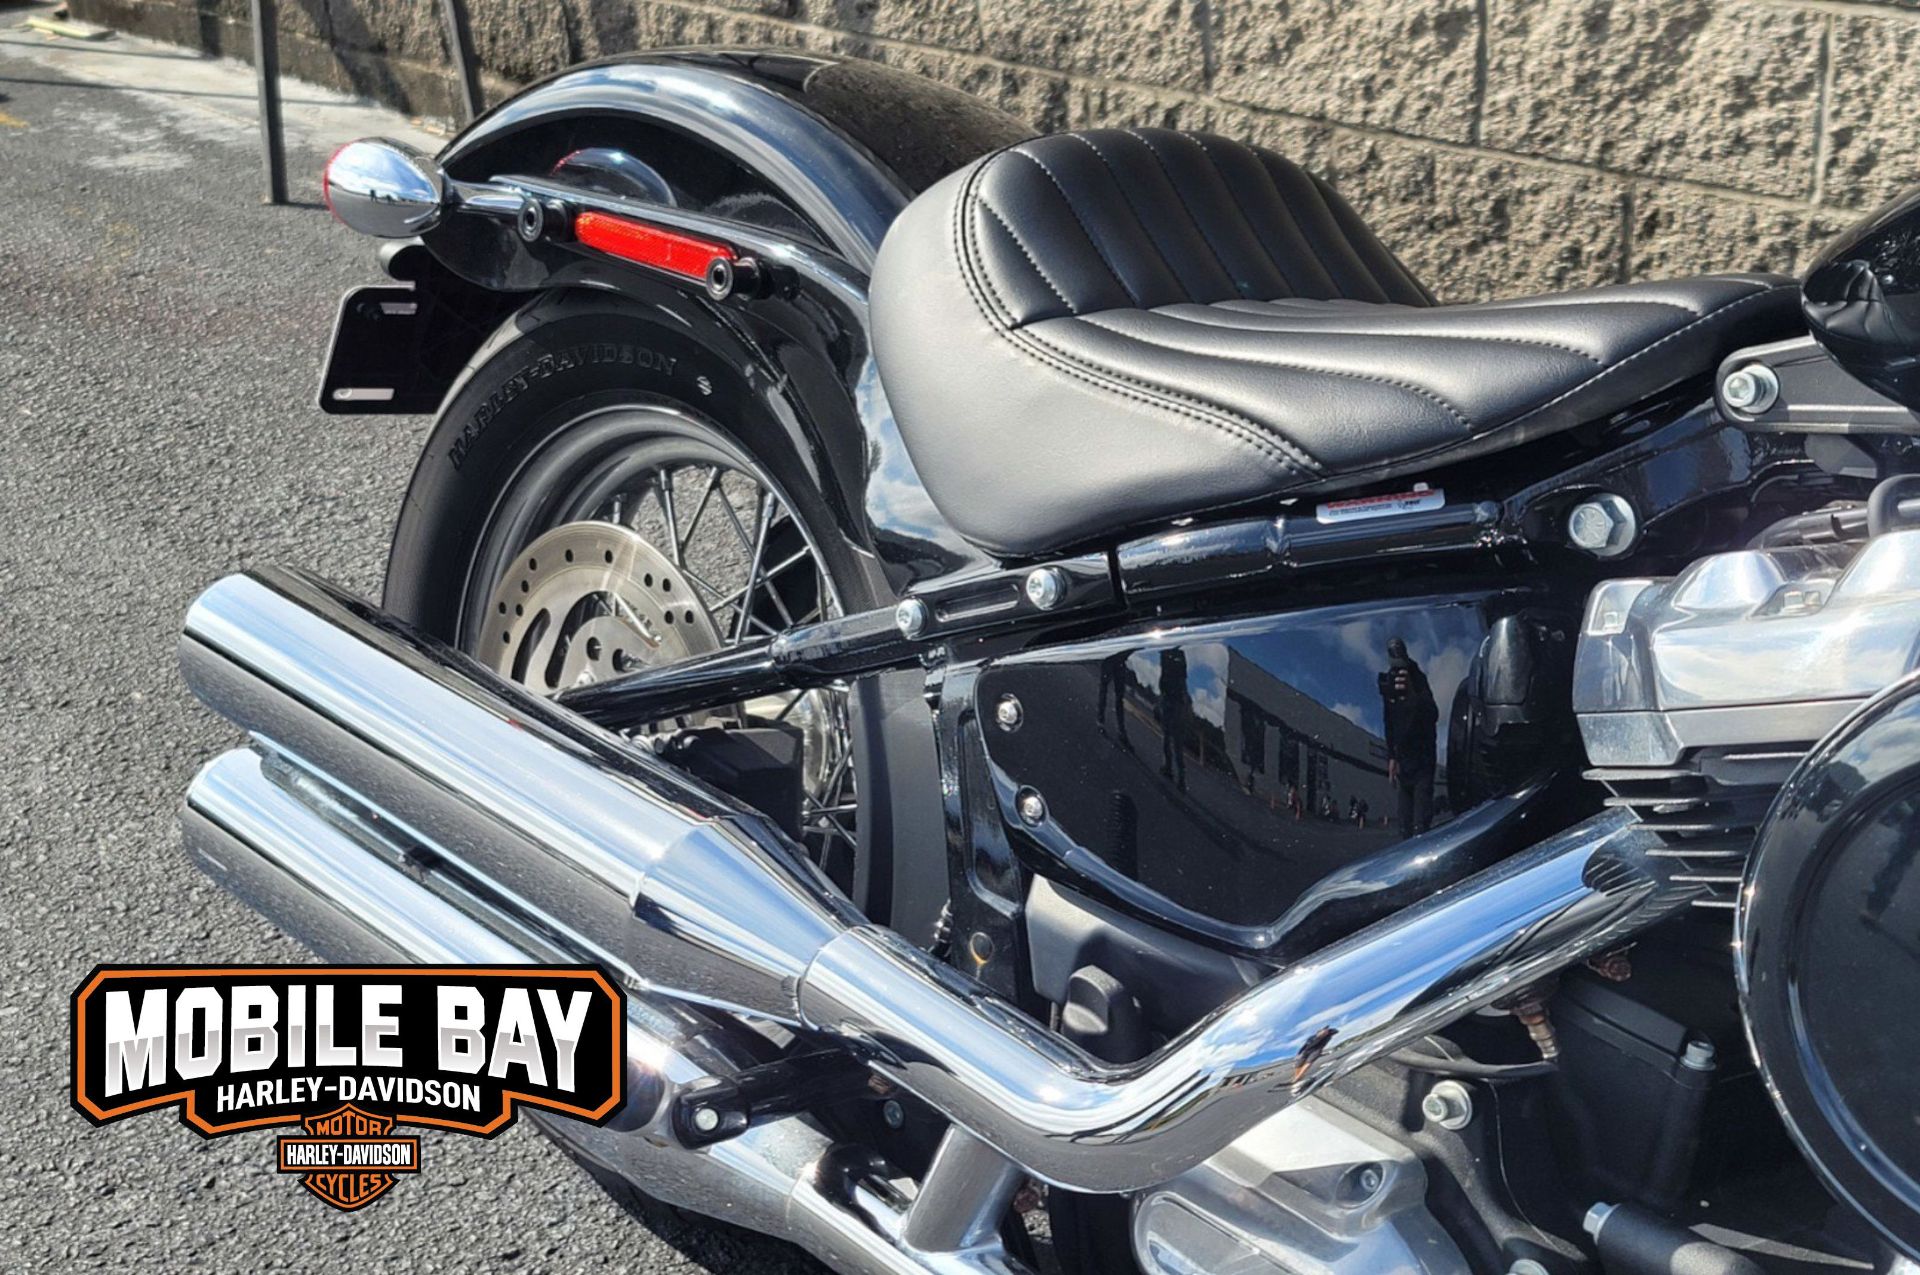 2020 Harley-Davidson Softail® Standard in Mobile, Alabama - Photo 8